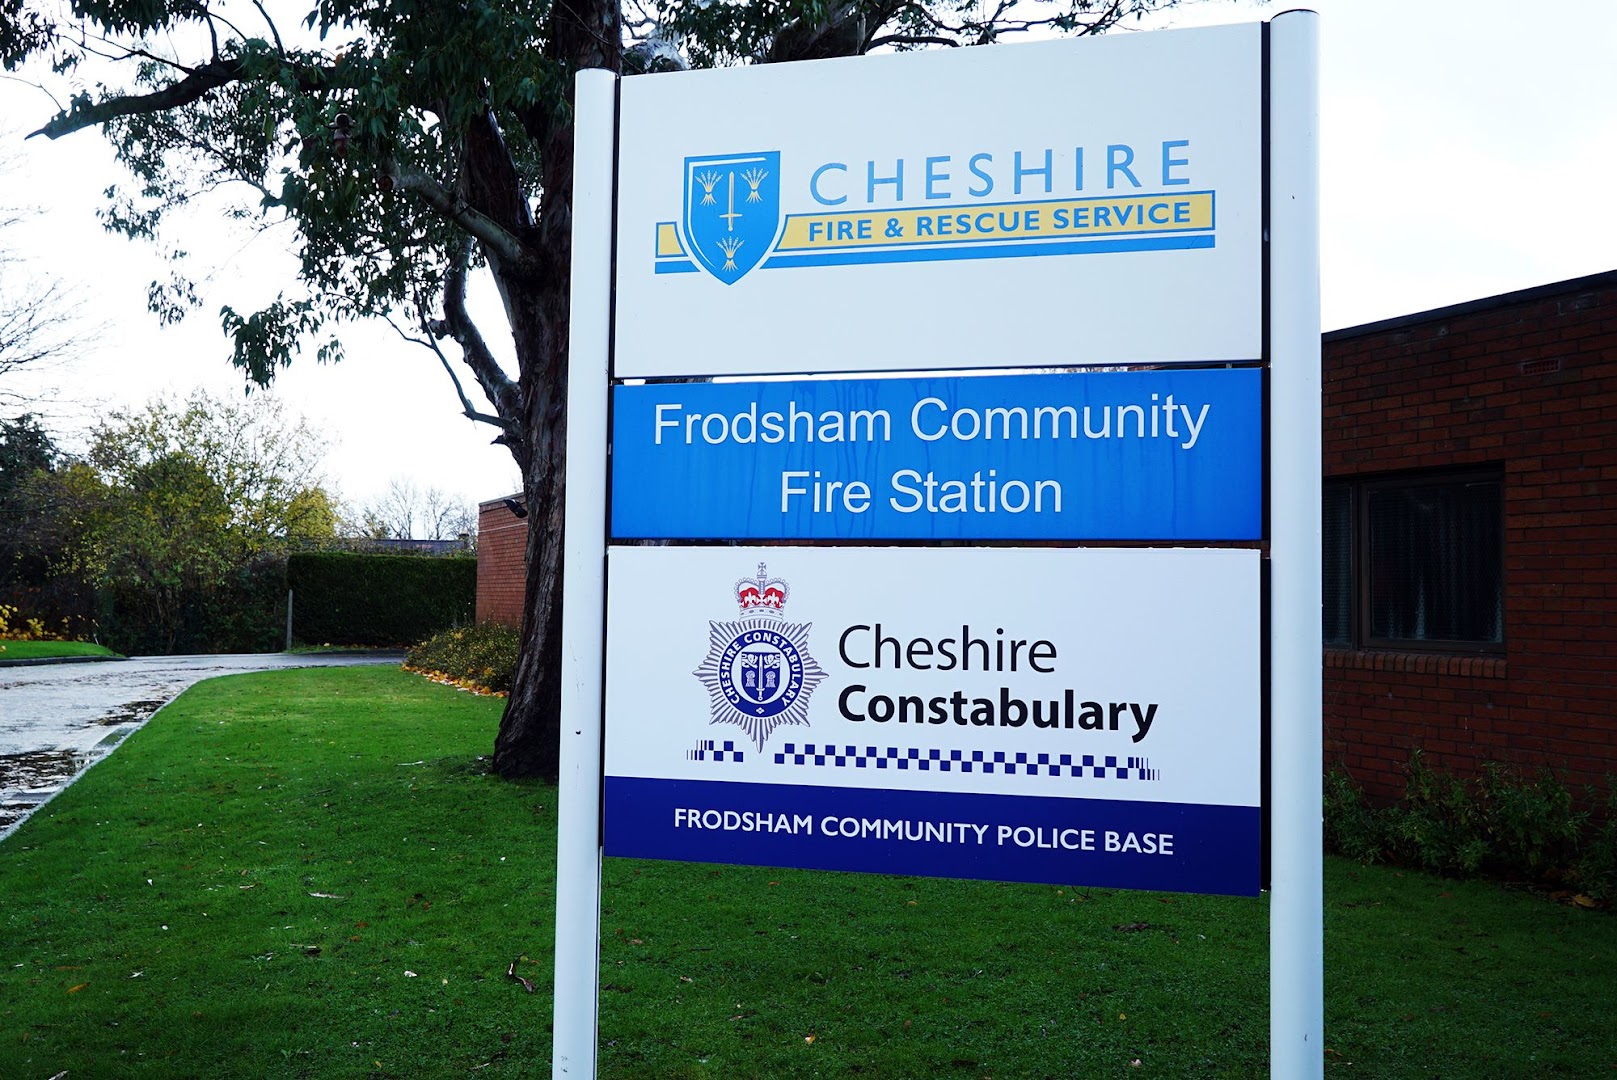 Frodsham Community Police Base